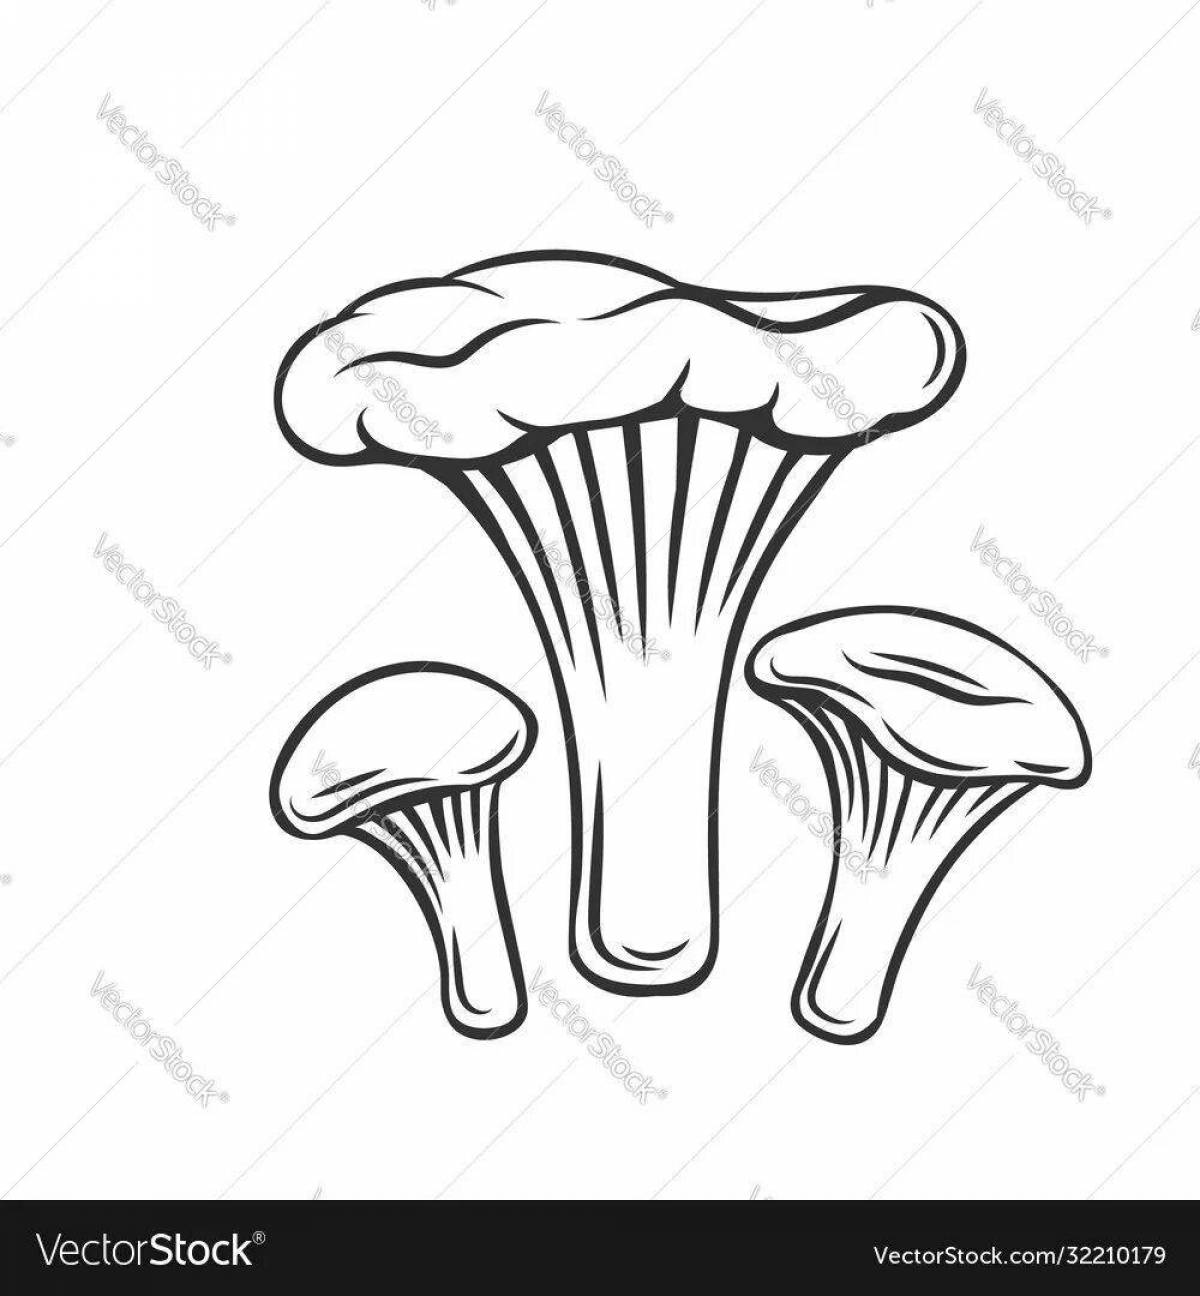 Fun coloring of chanterelle mushrooms